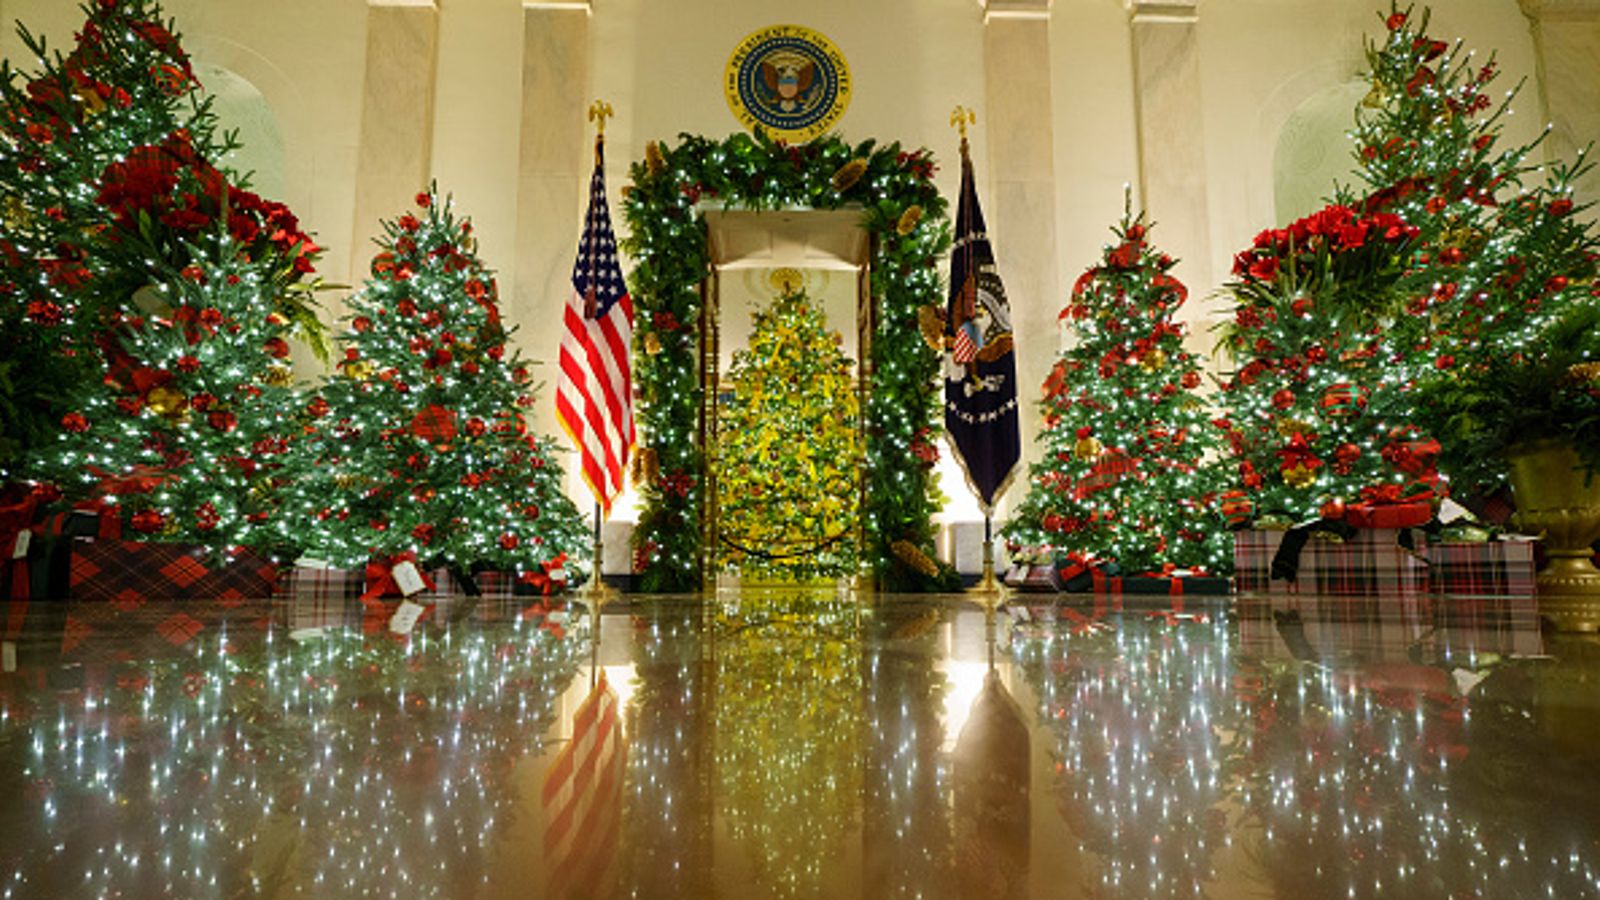 Melania Trump unveils White House Christmas decorations - weeks after  secret recording revealed | US News | Sky News